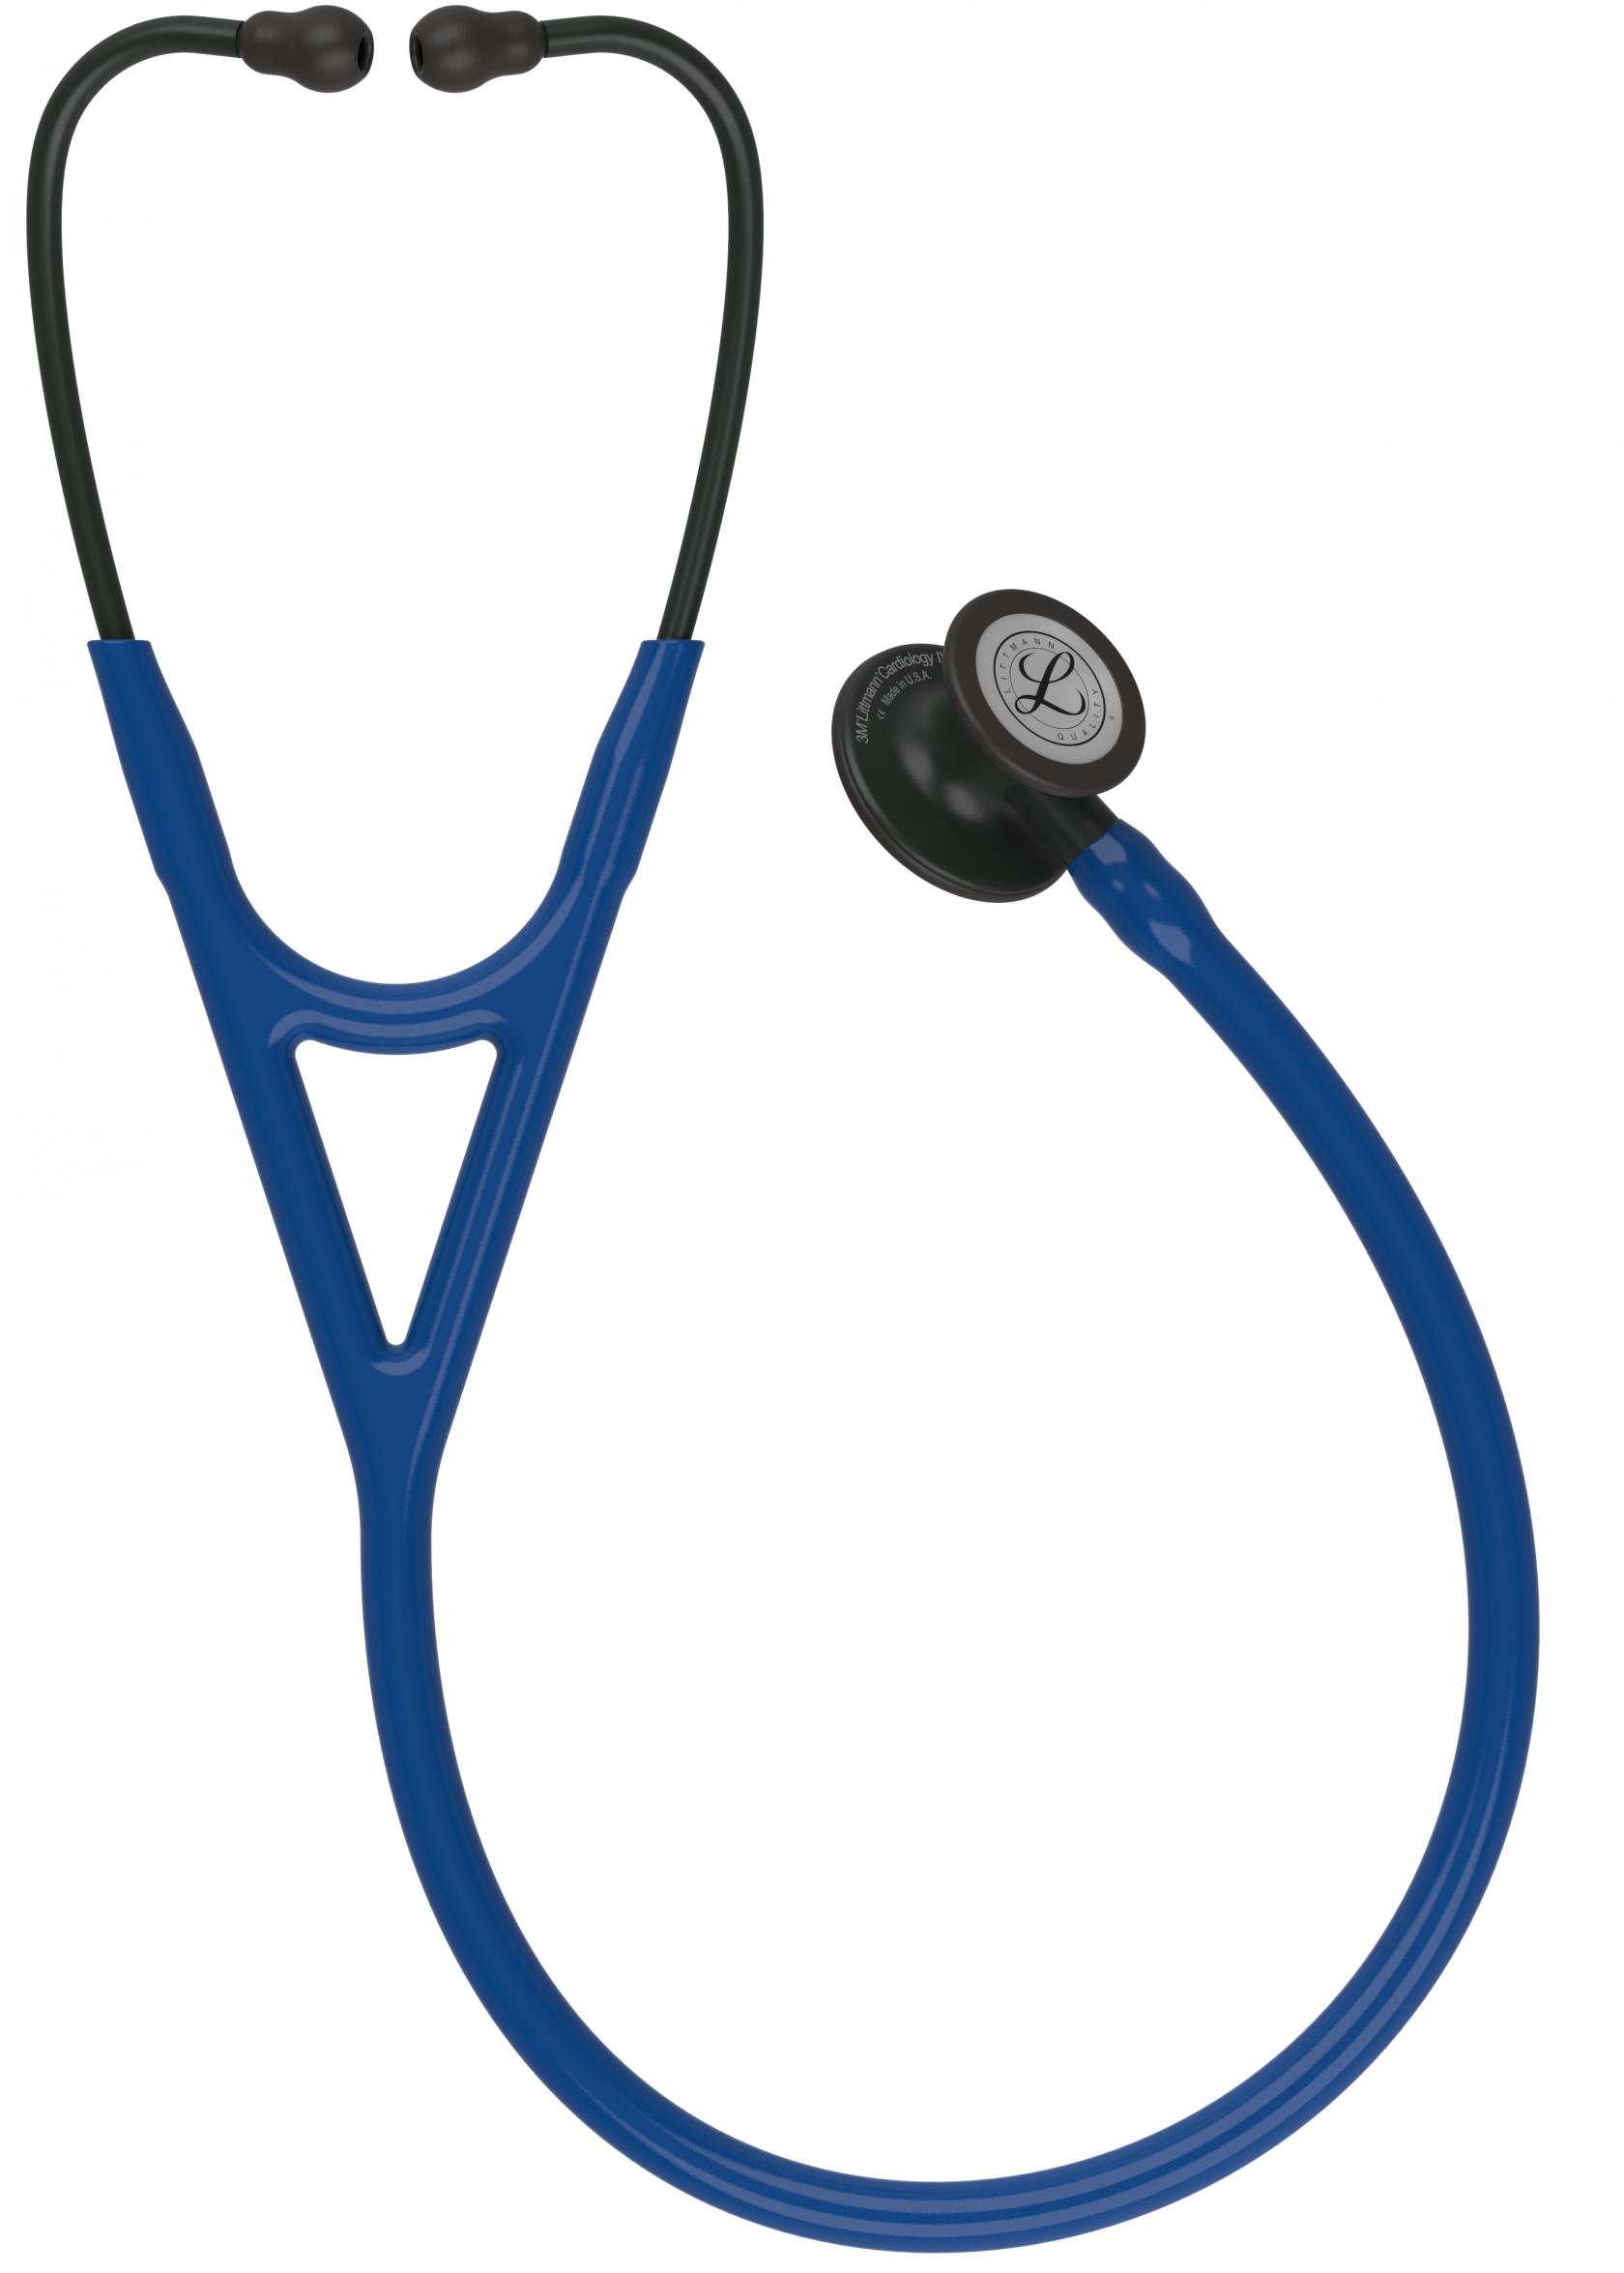 3M Stethoscope Littmann Cardiology IV Navy Blue with Black Finish